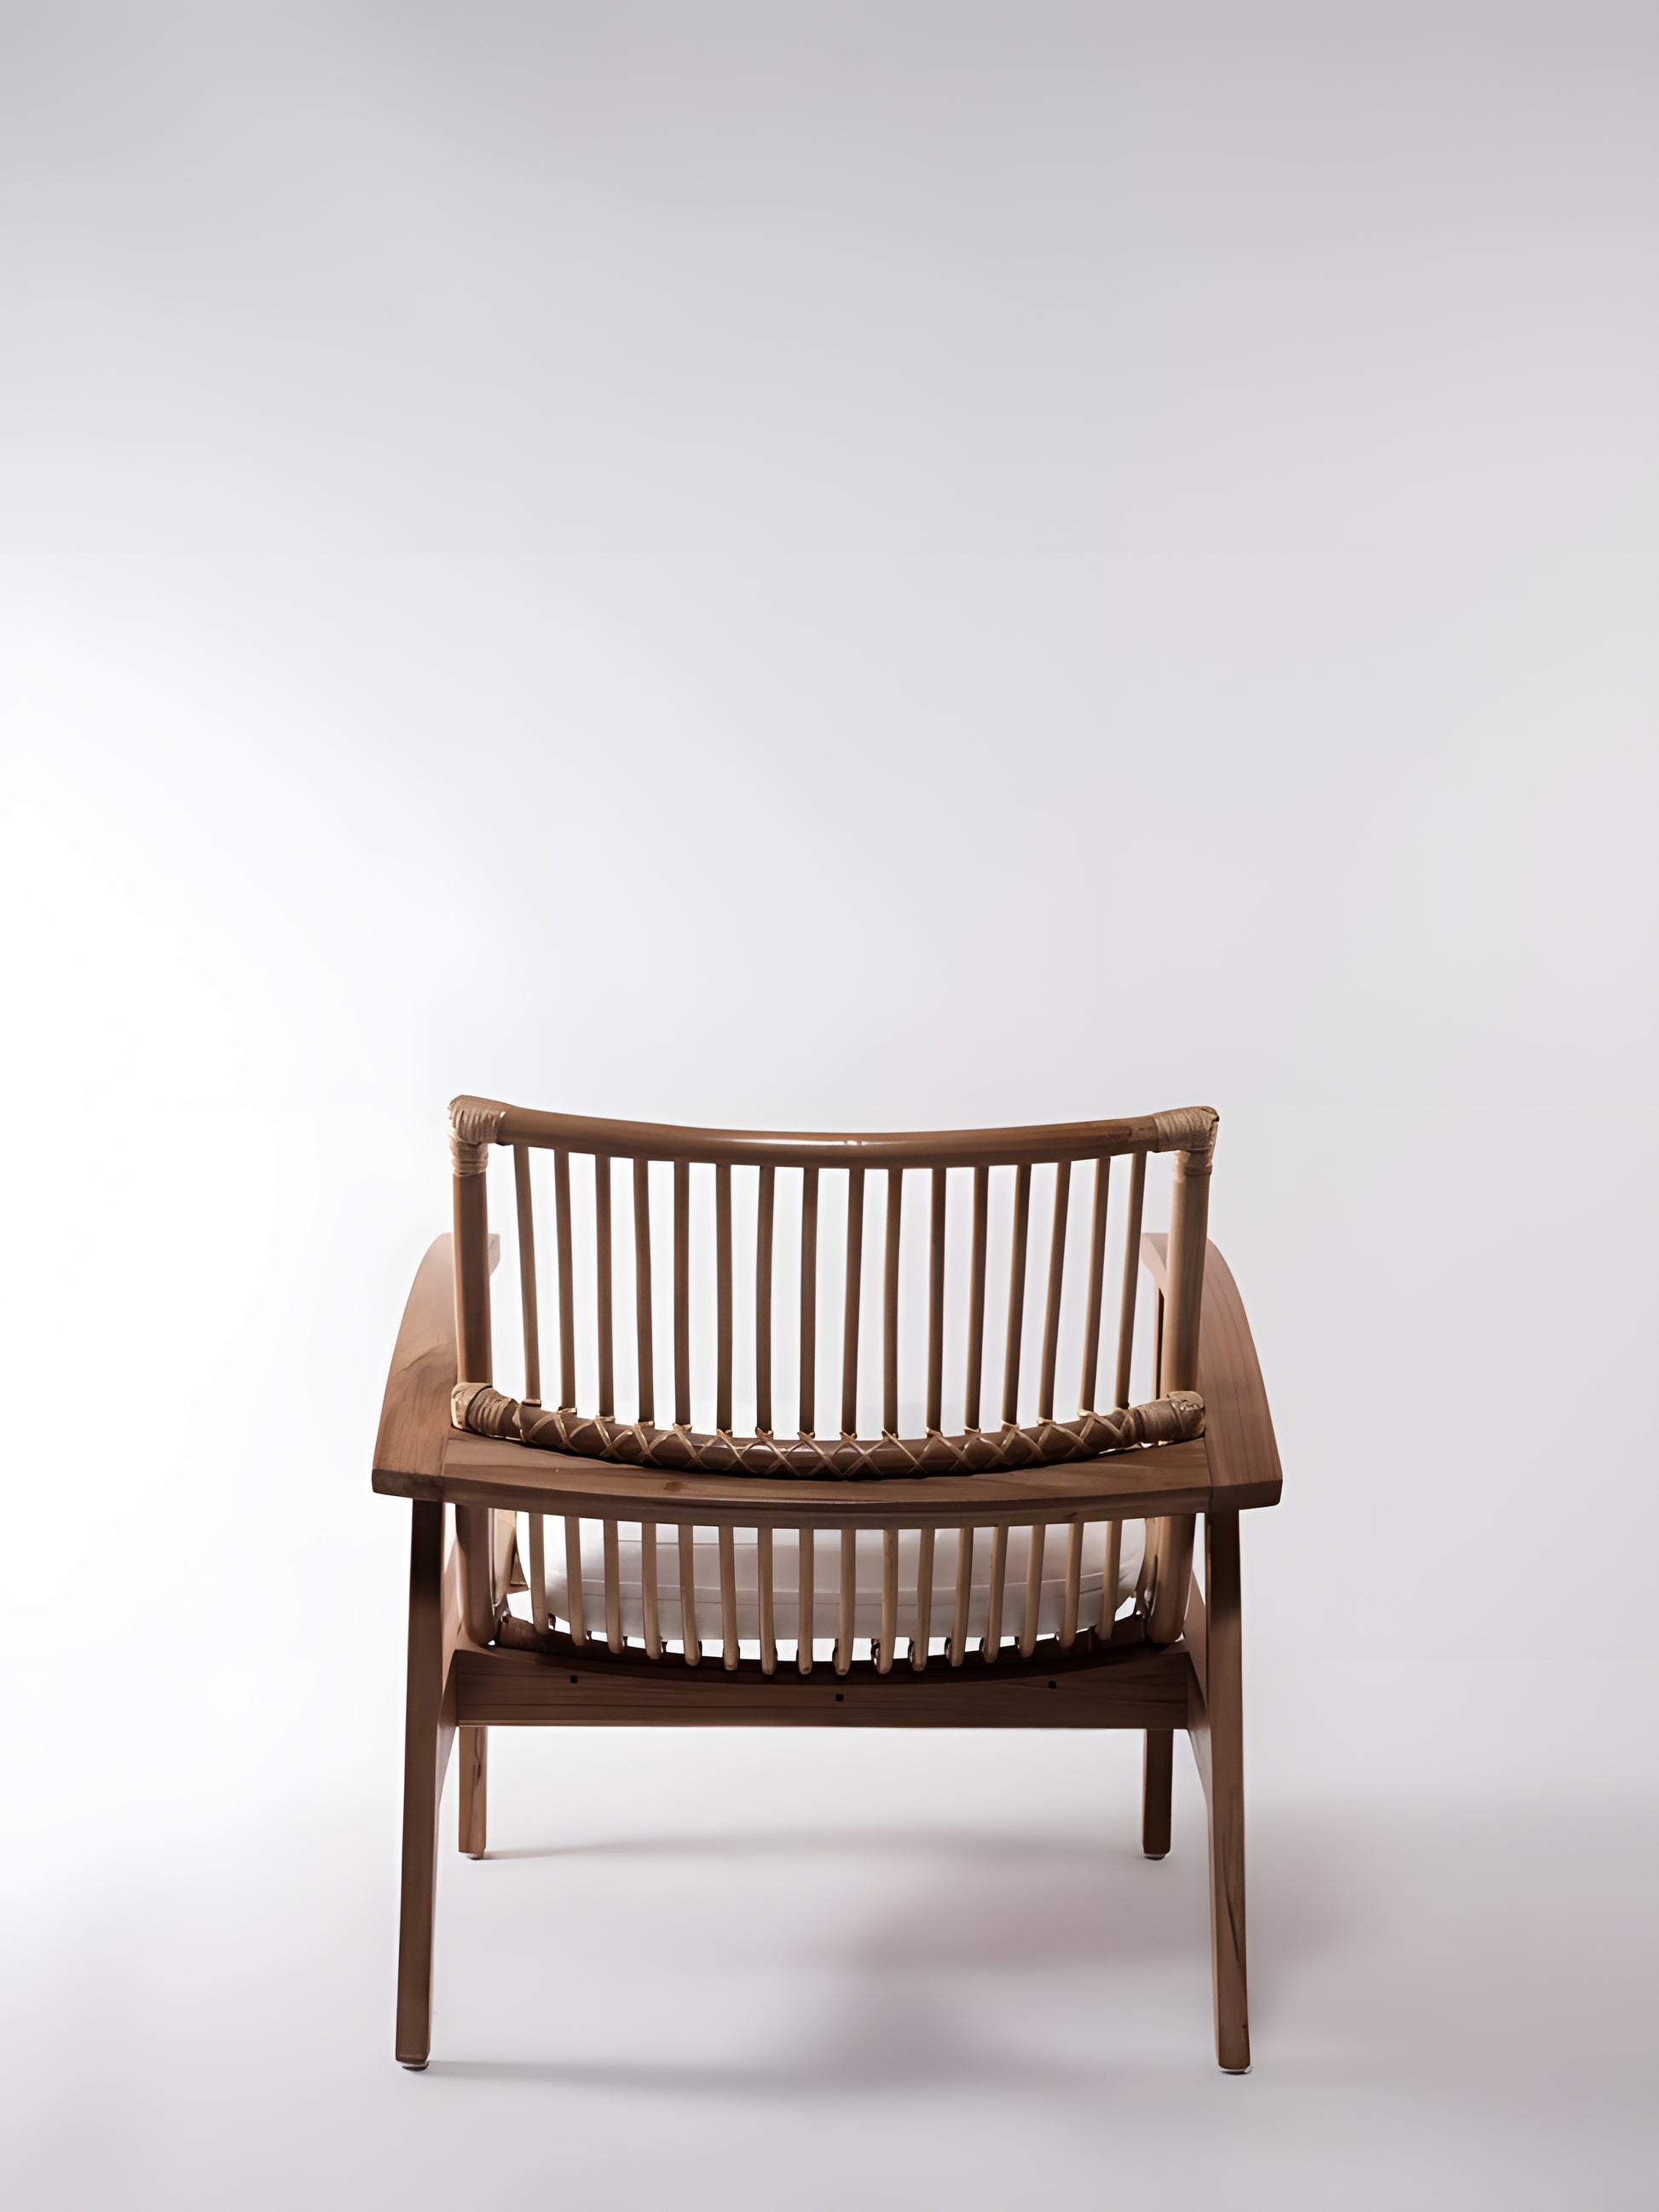 Rinjani Teak & Rattan Armchair back view by Mellowdays Furniture